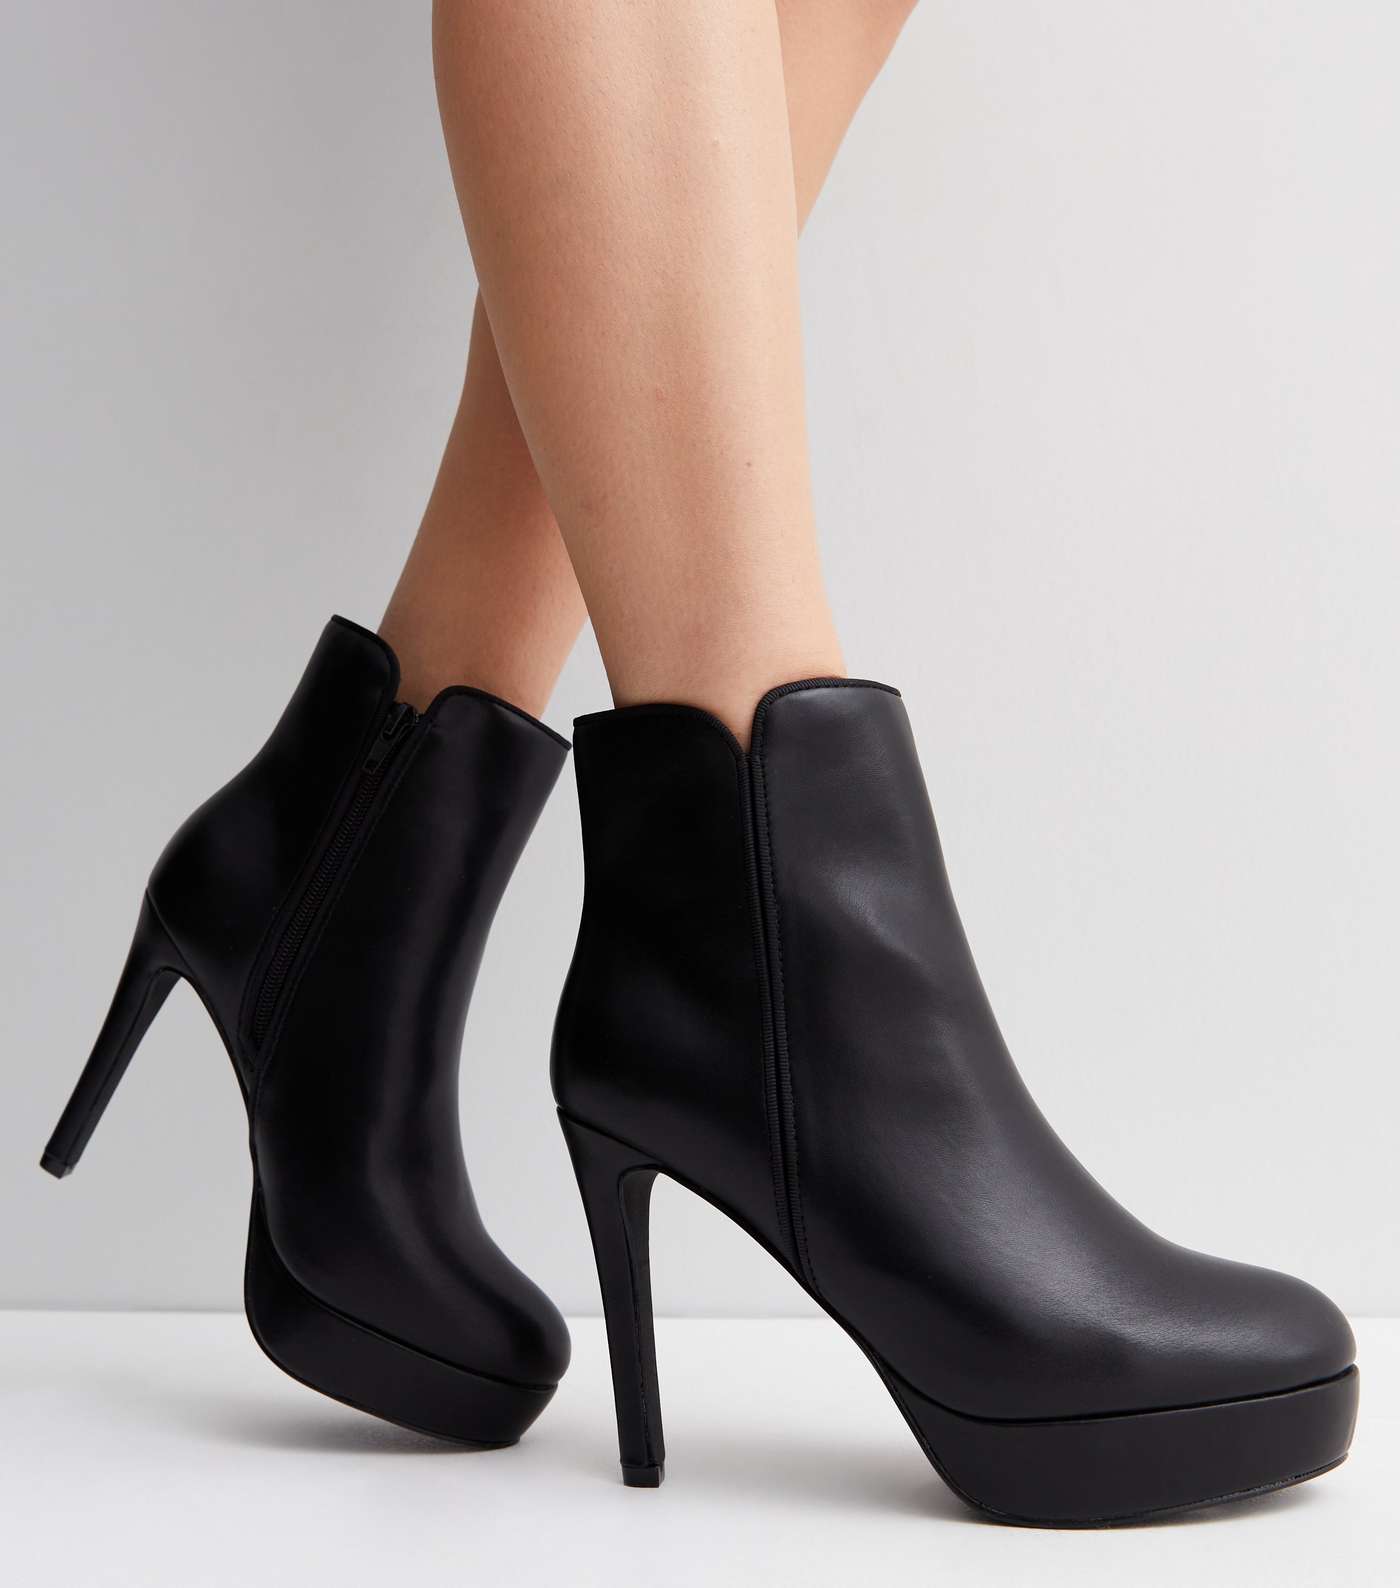 Black Leather-Look Platform Stiletto Heel Shoe Boots Image 2